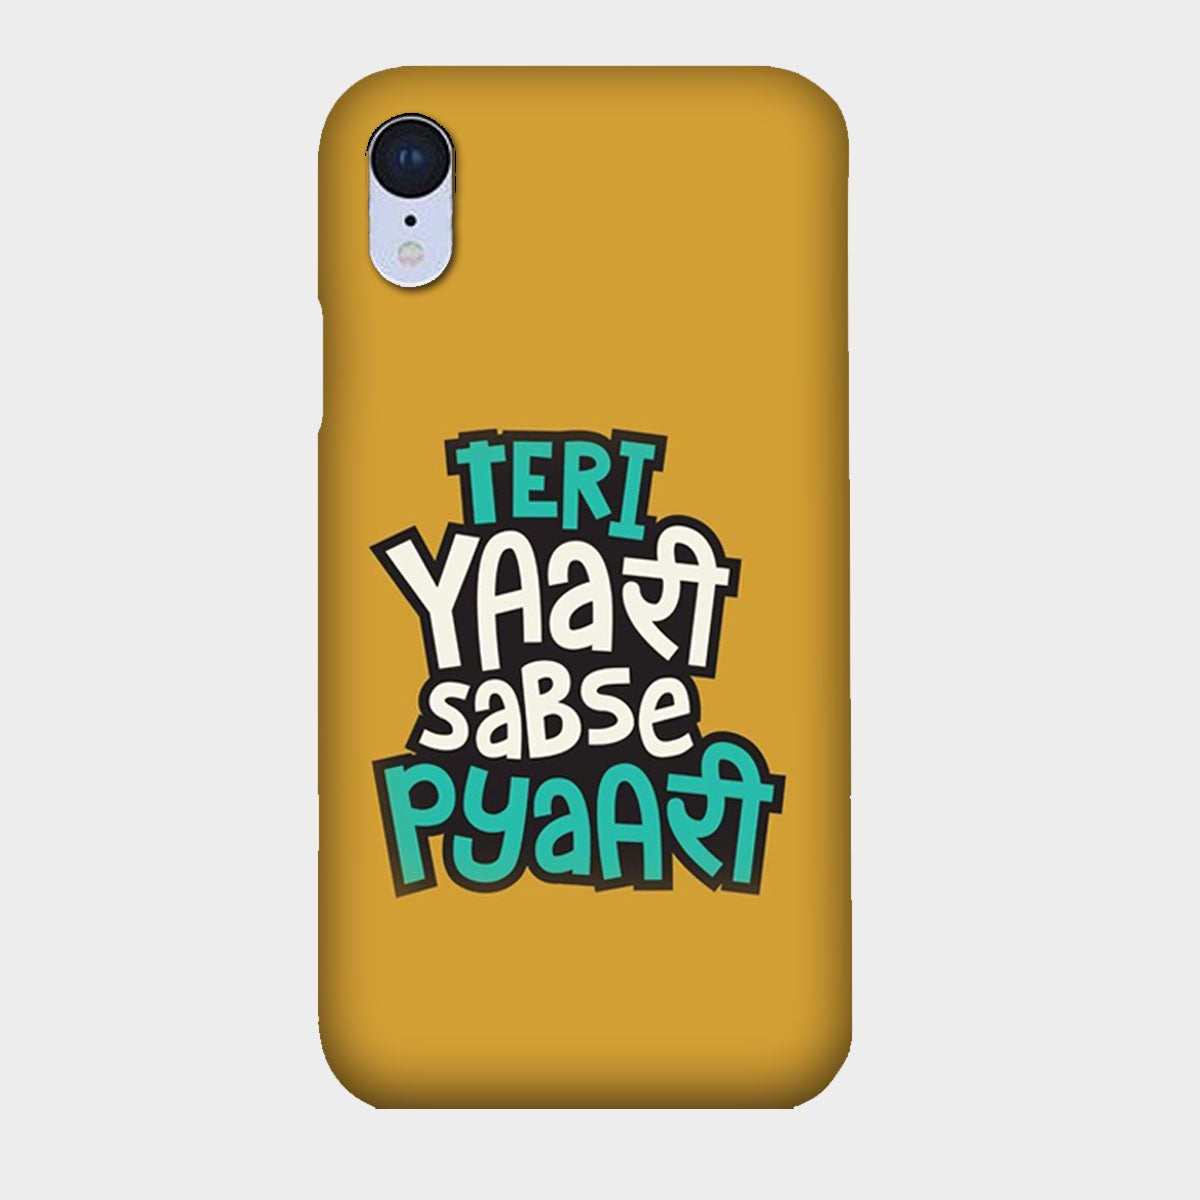 Teri Yaari Sabse Pyaari - Mobile Phone Cover - Hard Case